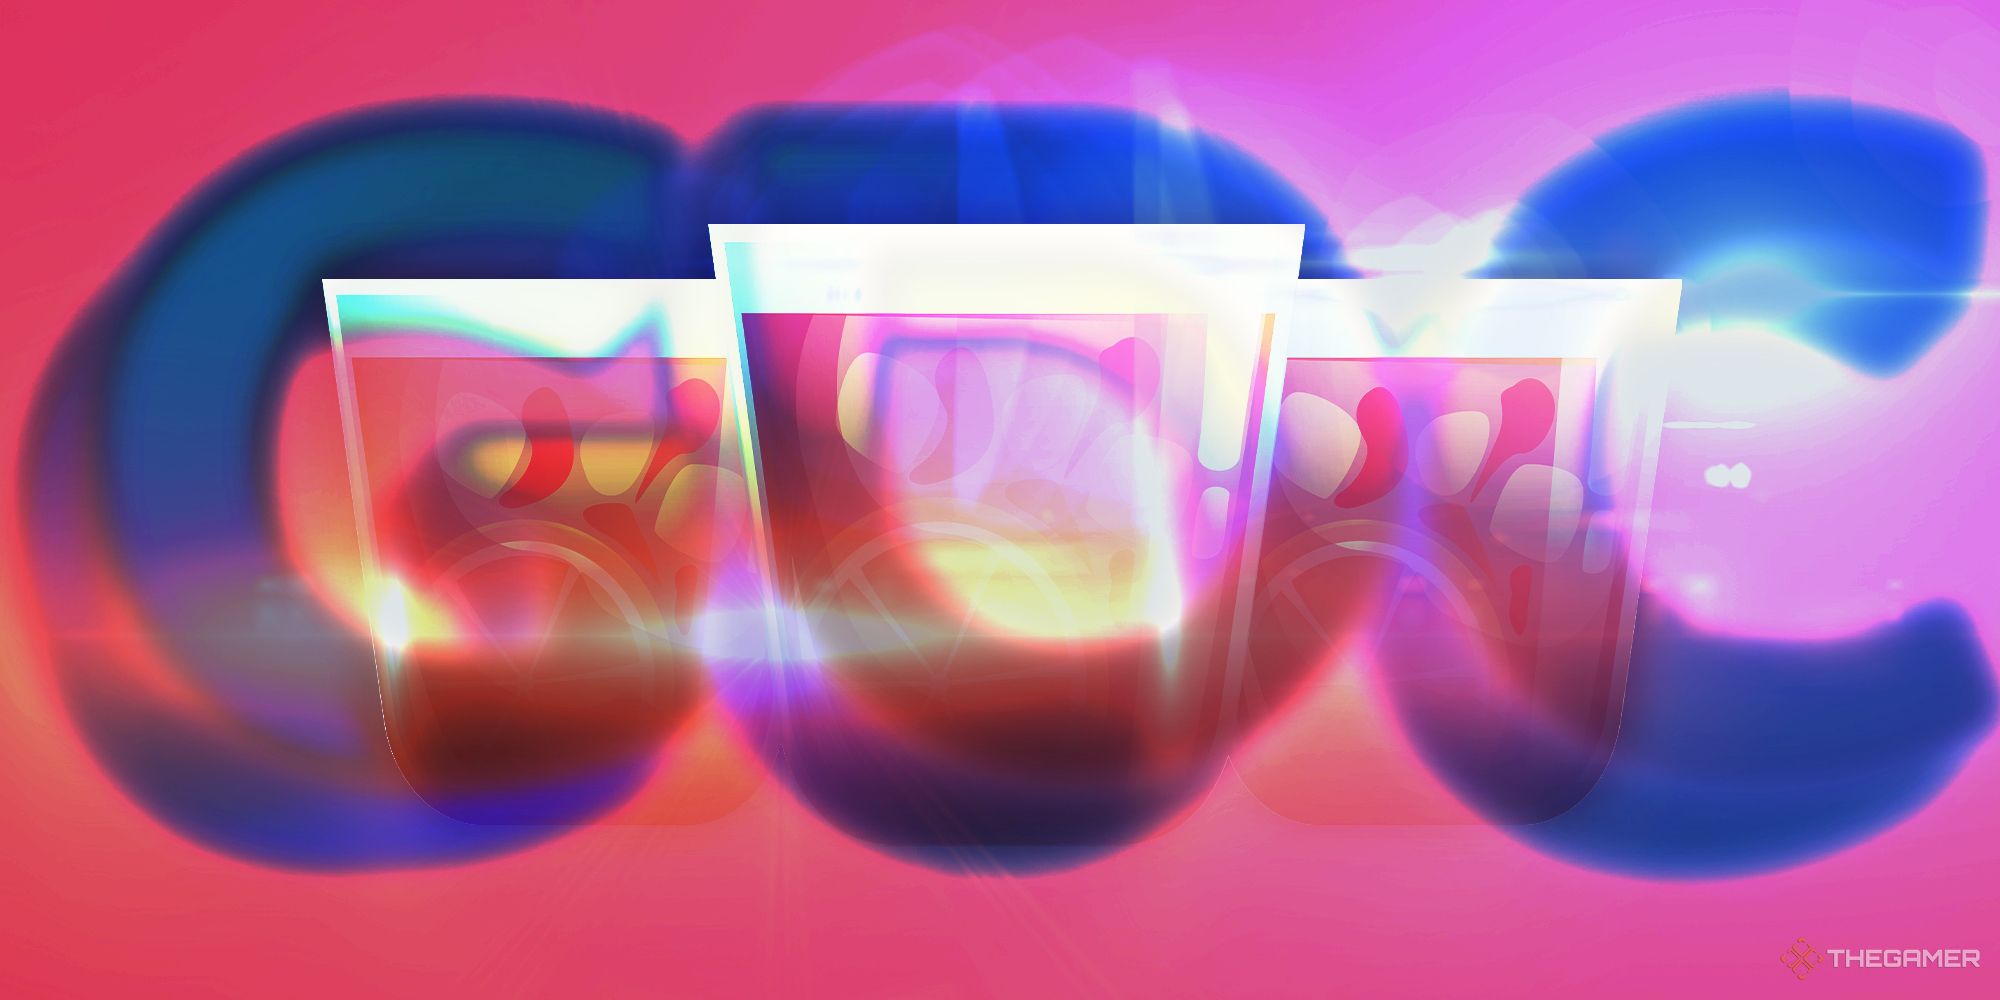 GDC logo illuminating three drinkks with a police siren reflecting on the image